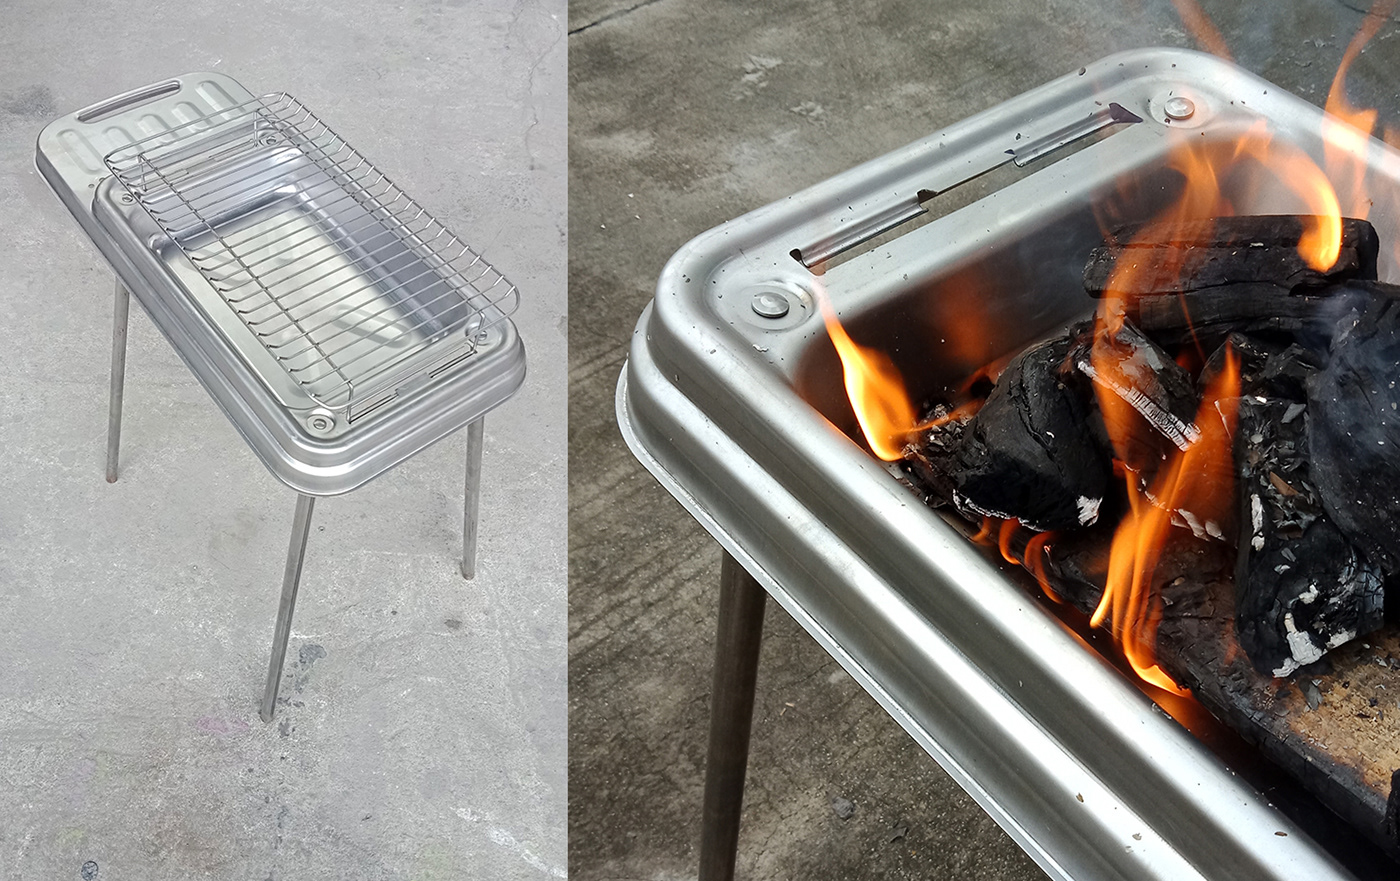 barbecue BBQ Carrefour design hyba